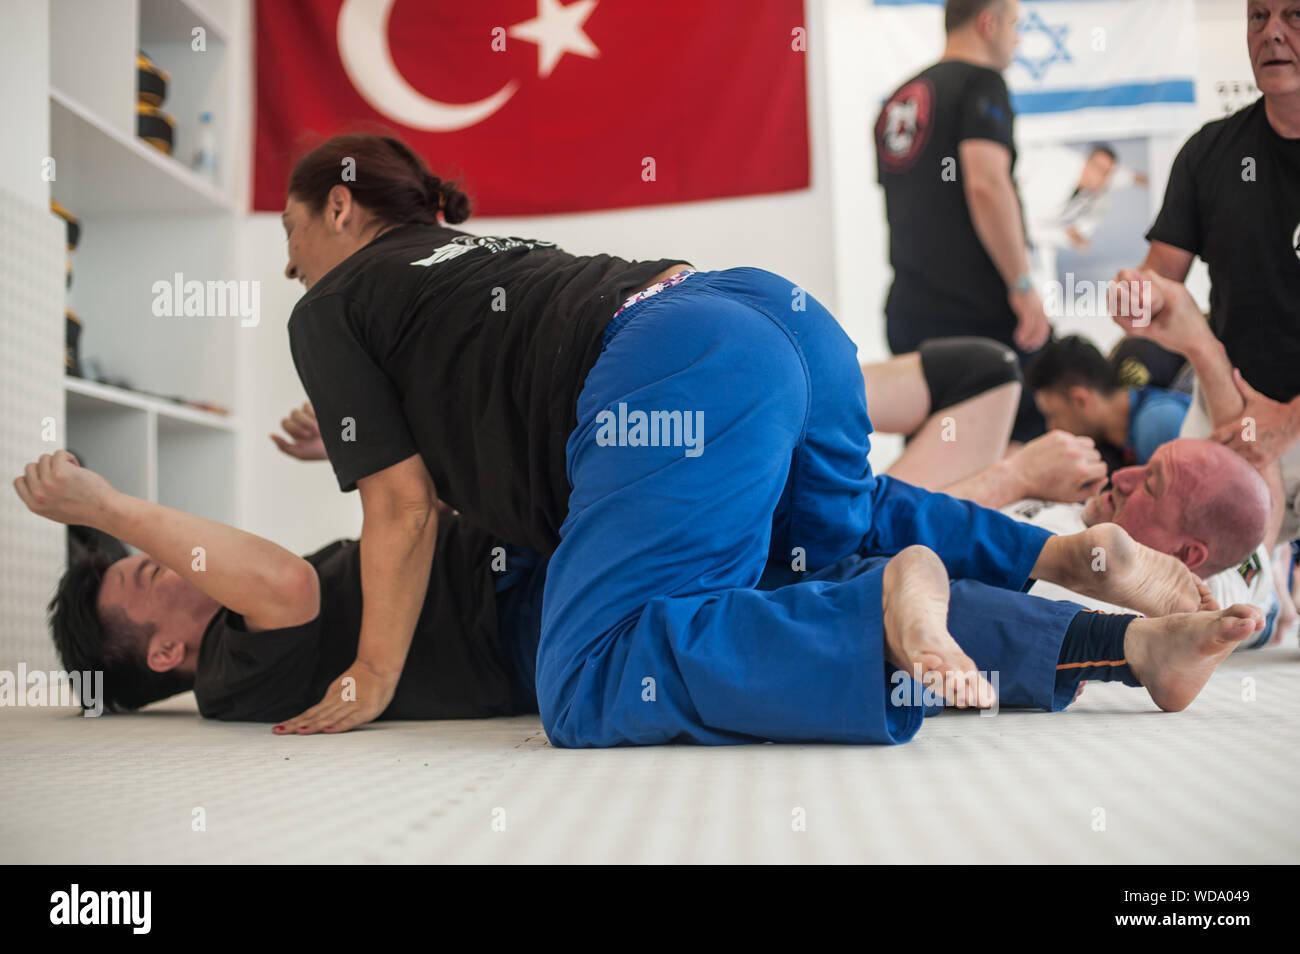 istanbul turkey maj 30 jun 02 2019 a woman and a man doing bjj brazilian jiu jitsu ground fighting sparing training and demonstration on genera stock photo alamy